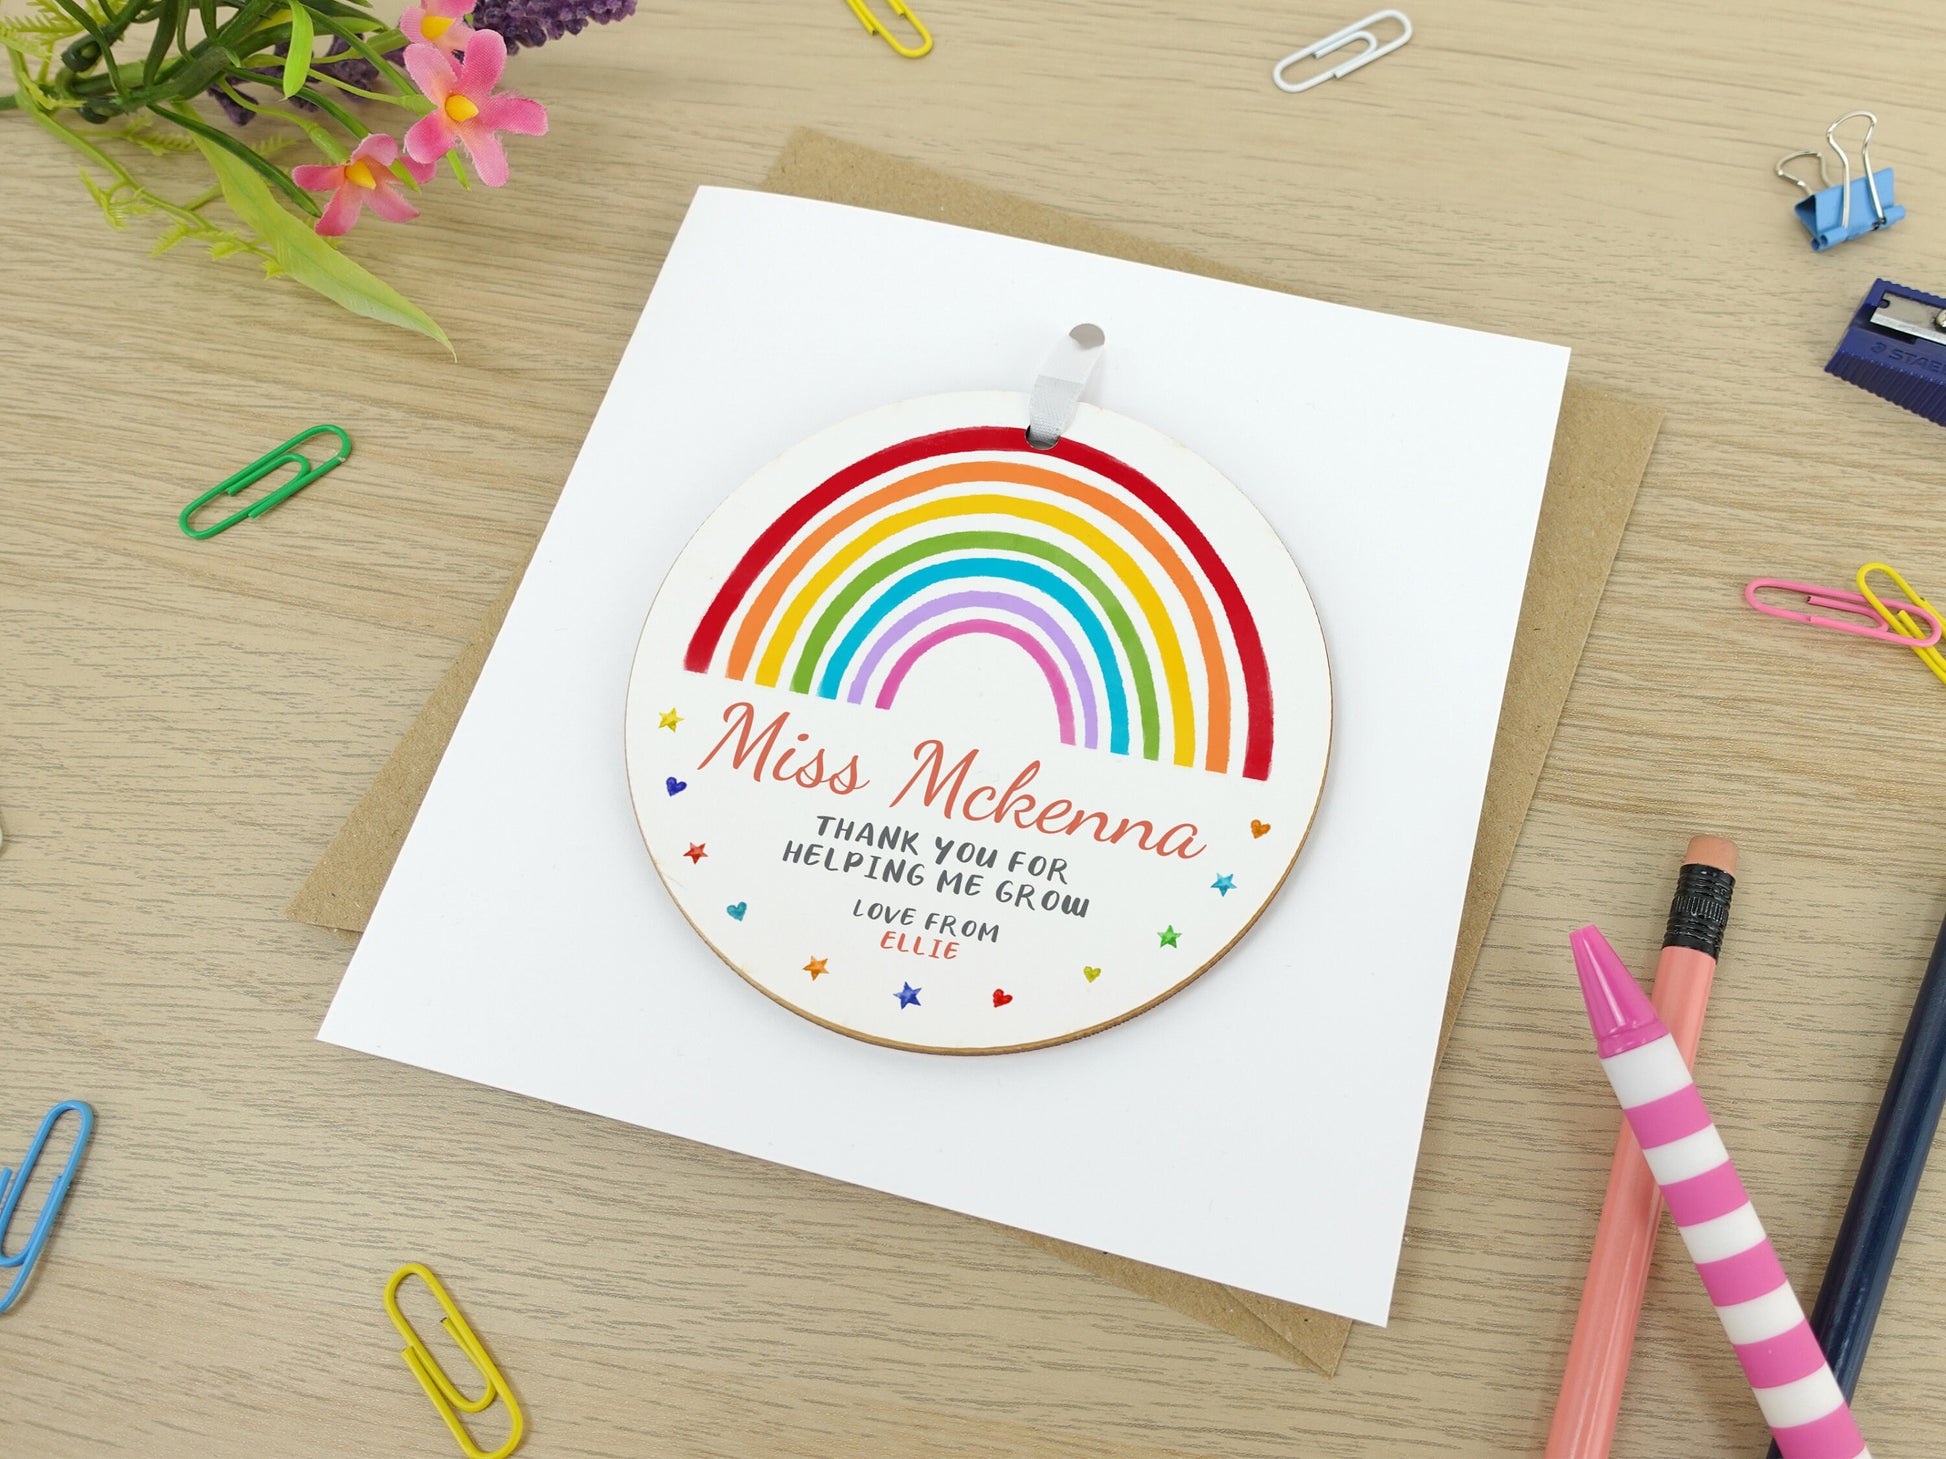 Personalised teacher gift | End of term present | Thank you Rainbow Gift | Teacher TA School Nursery Gift | Leaving gift for teacher VA028